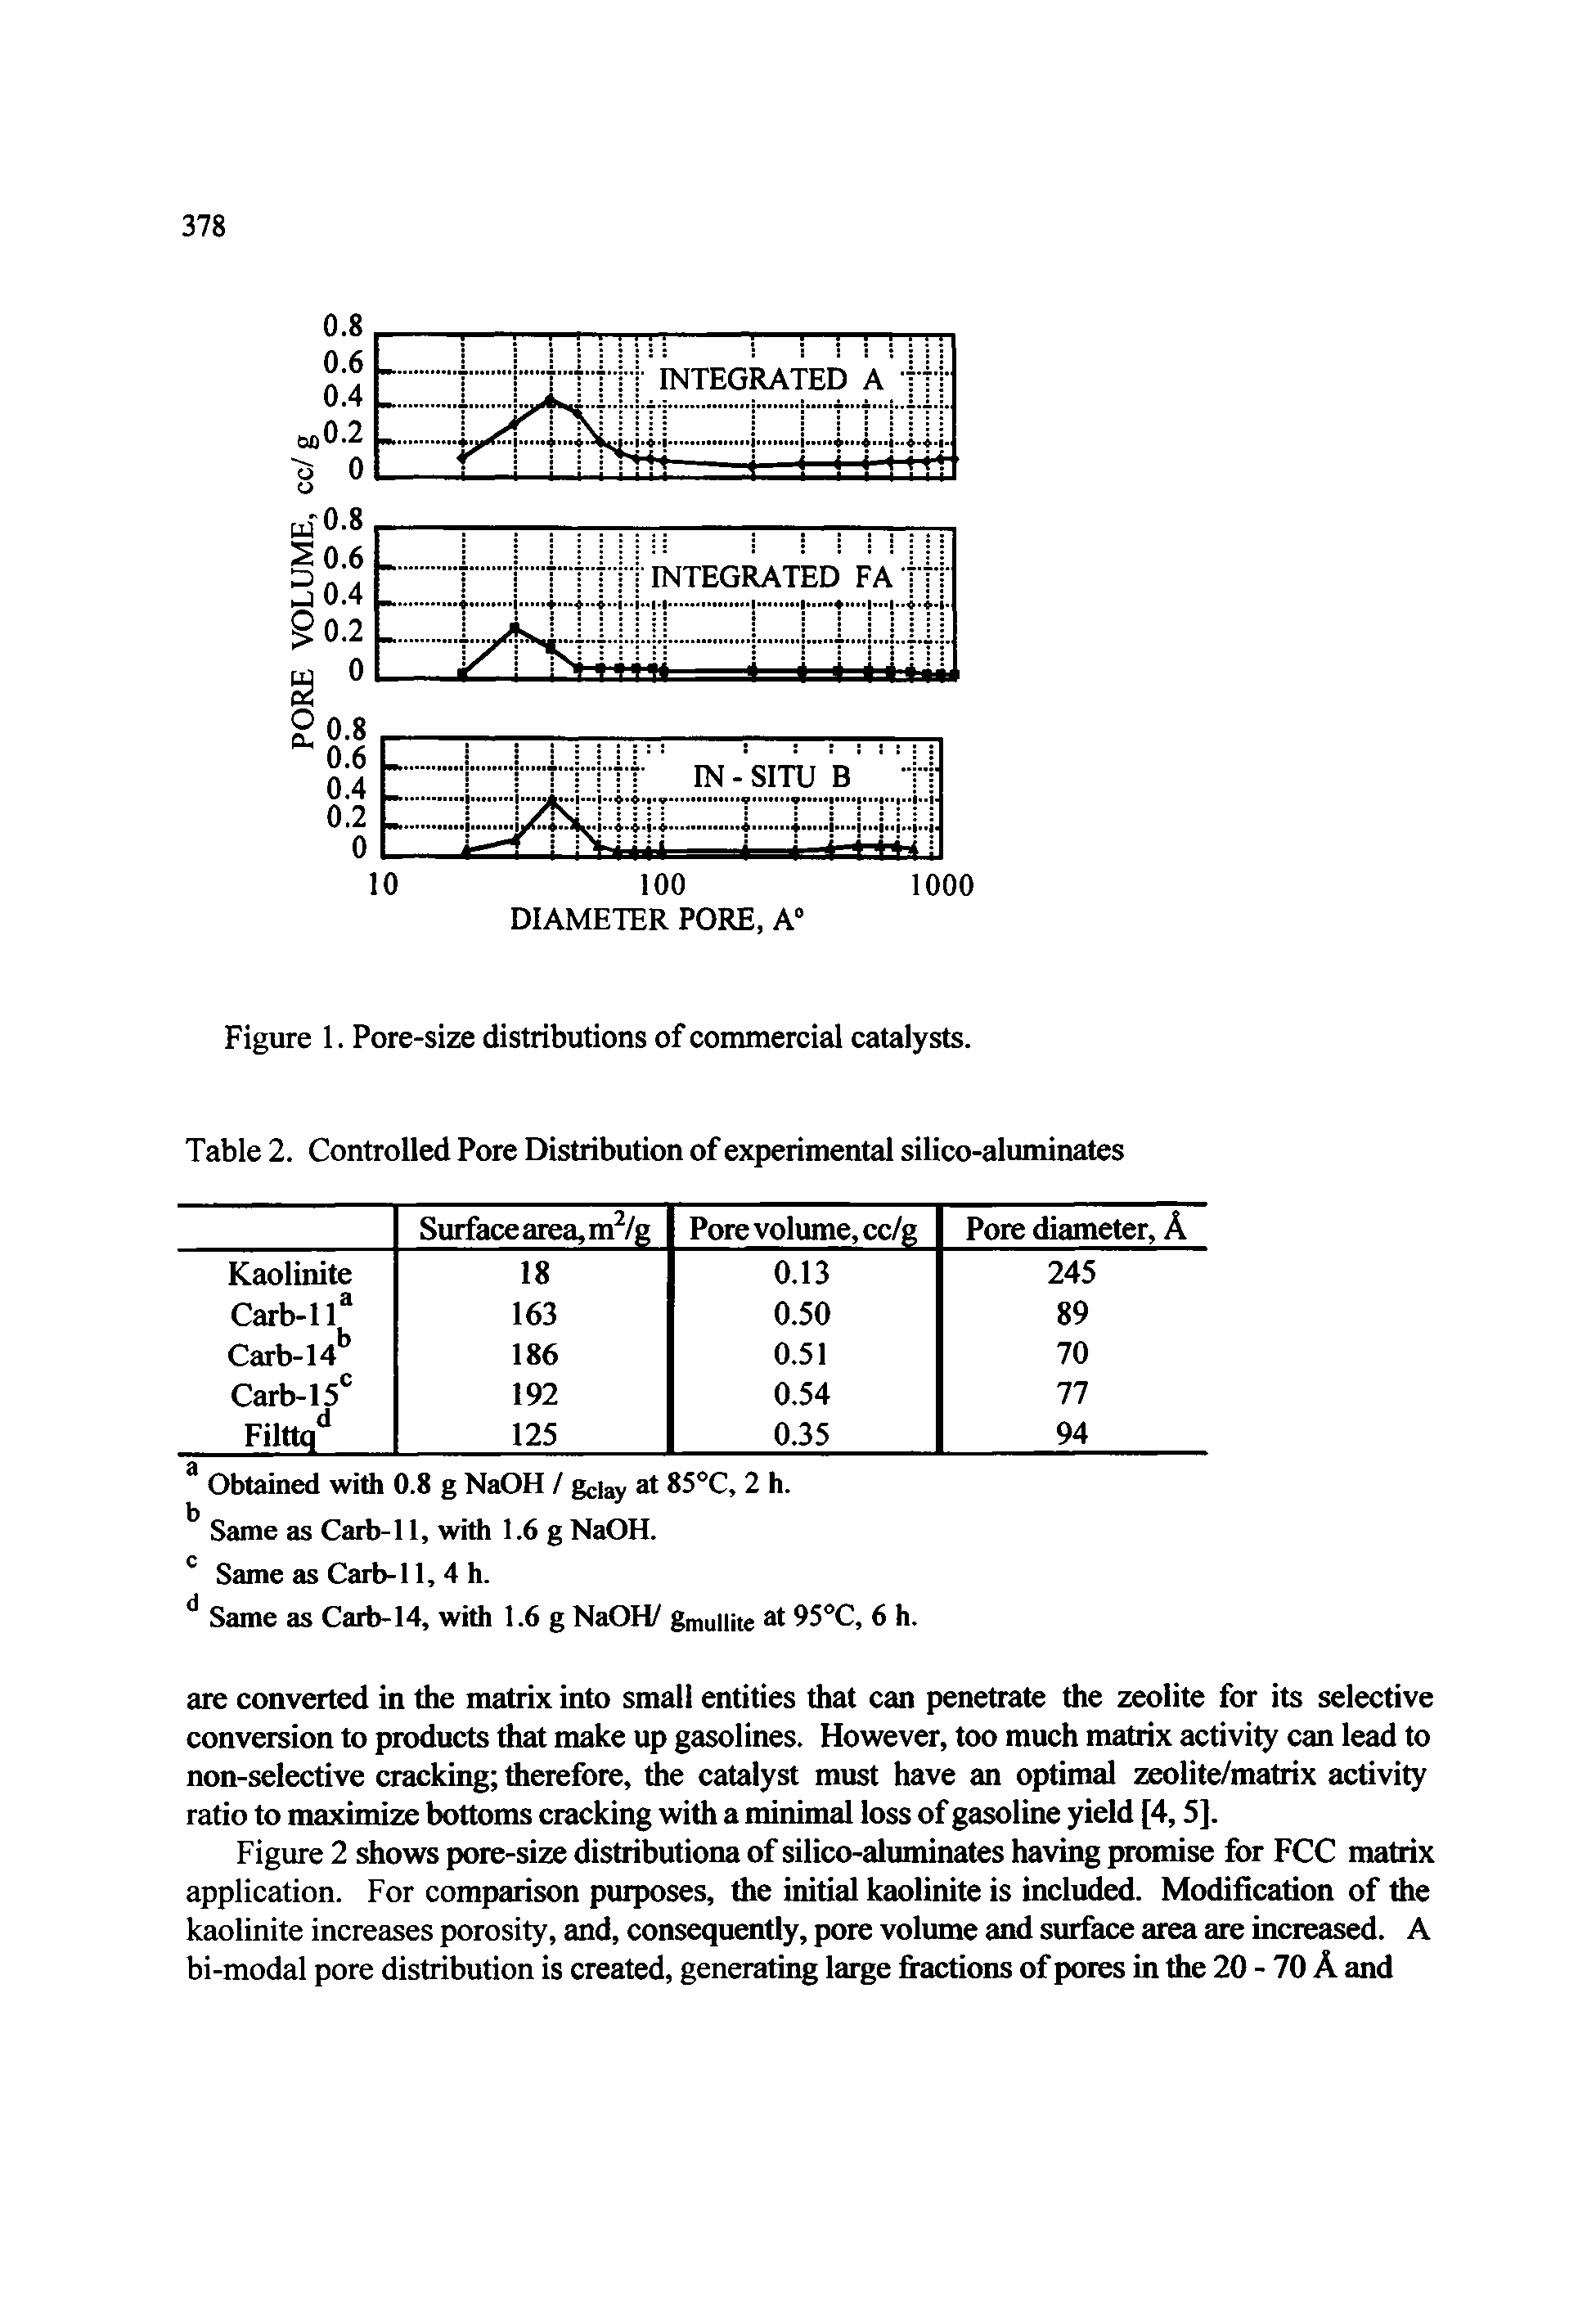 Table 2. Controlled Pore Distribution of experimental silico-aluminates...